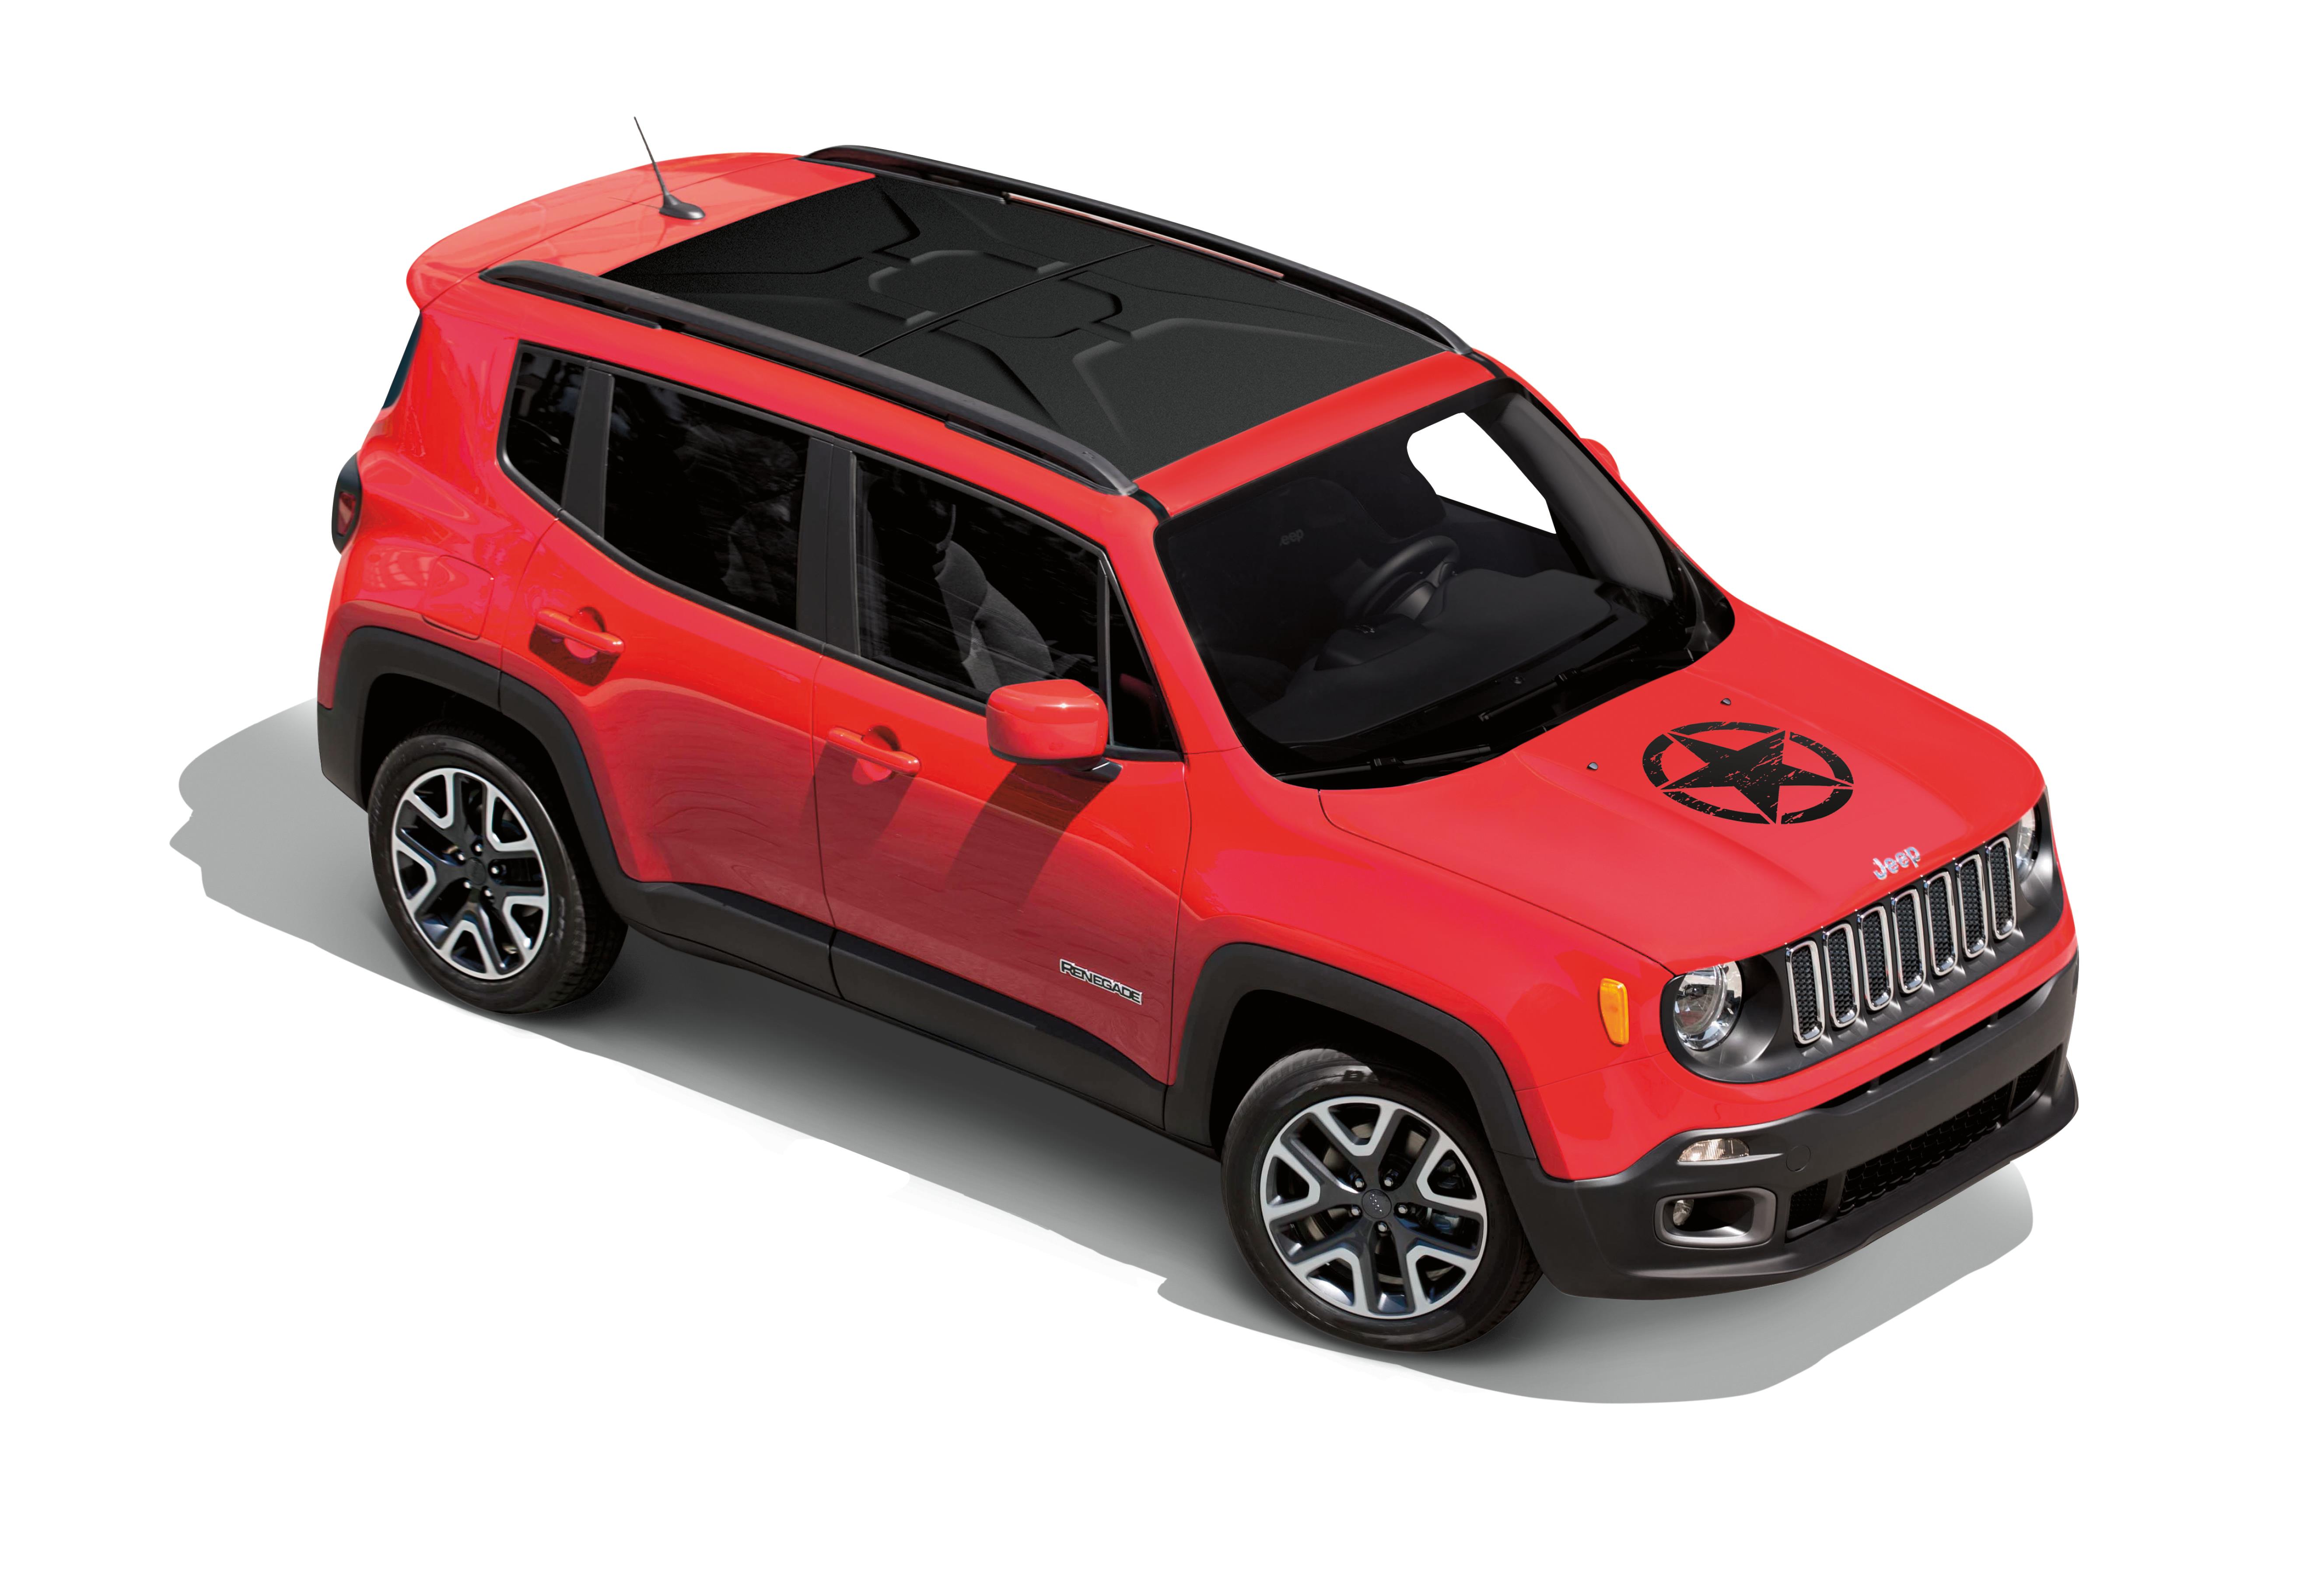 23 Popular 2018 jeep renegade exterior accessories with Photos Design